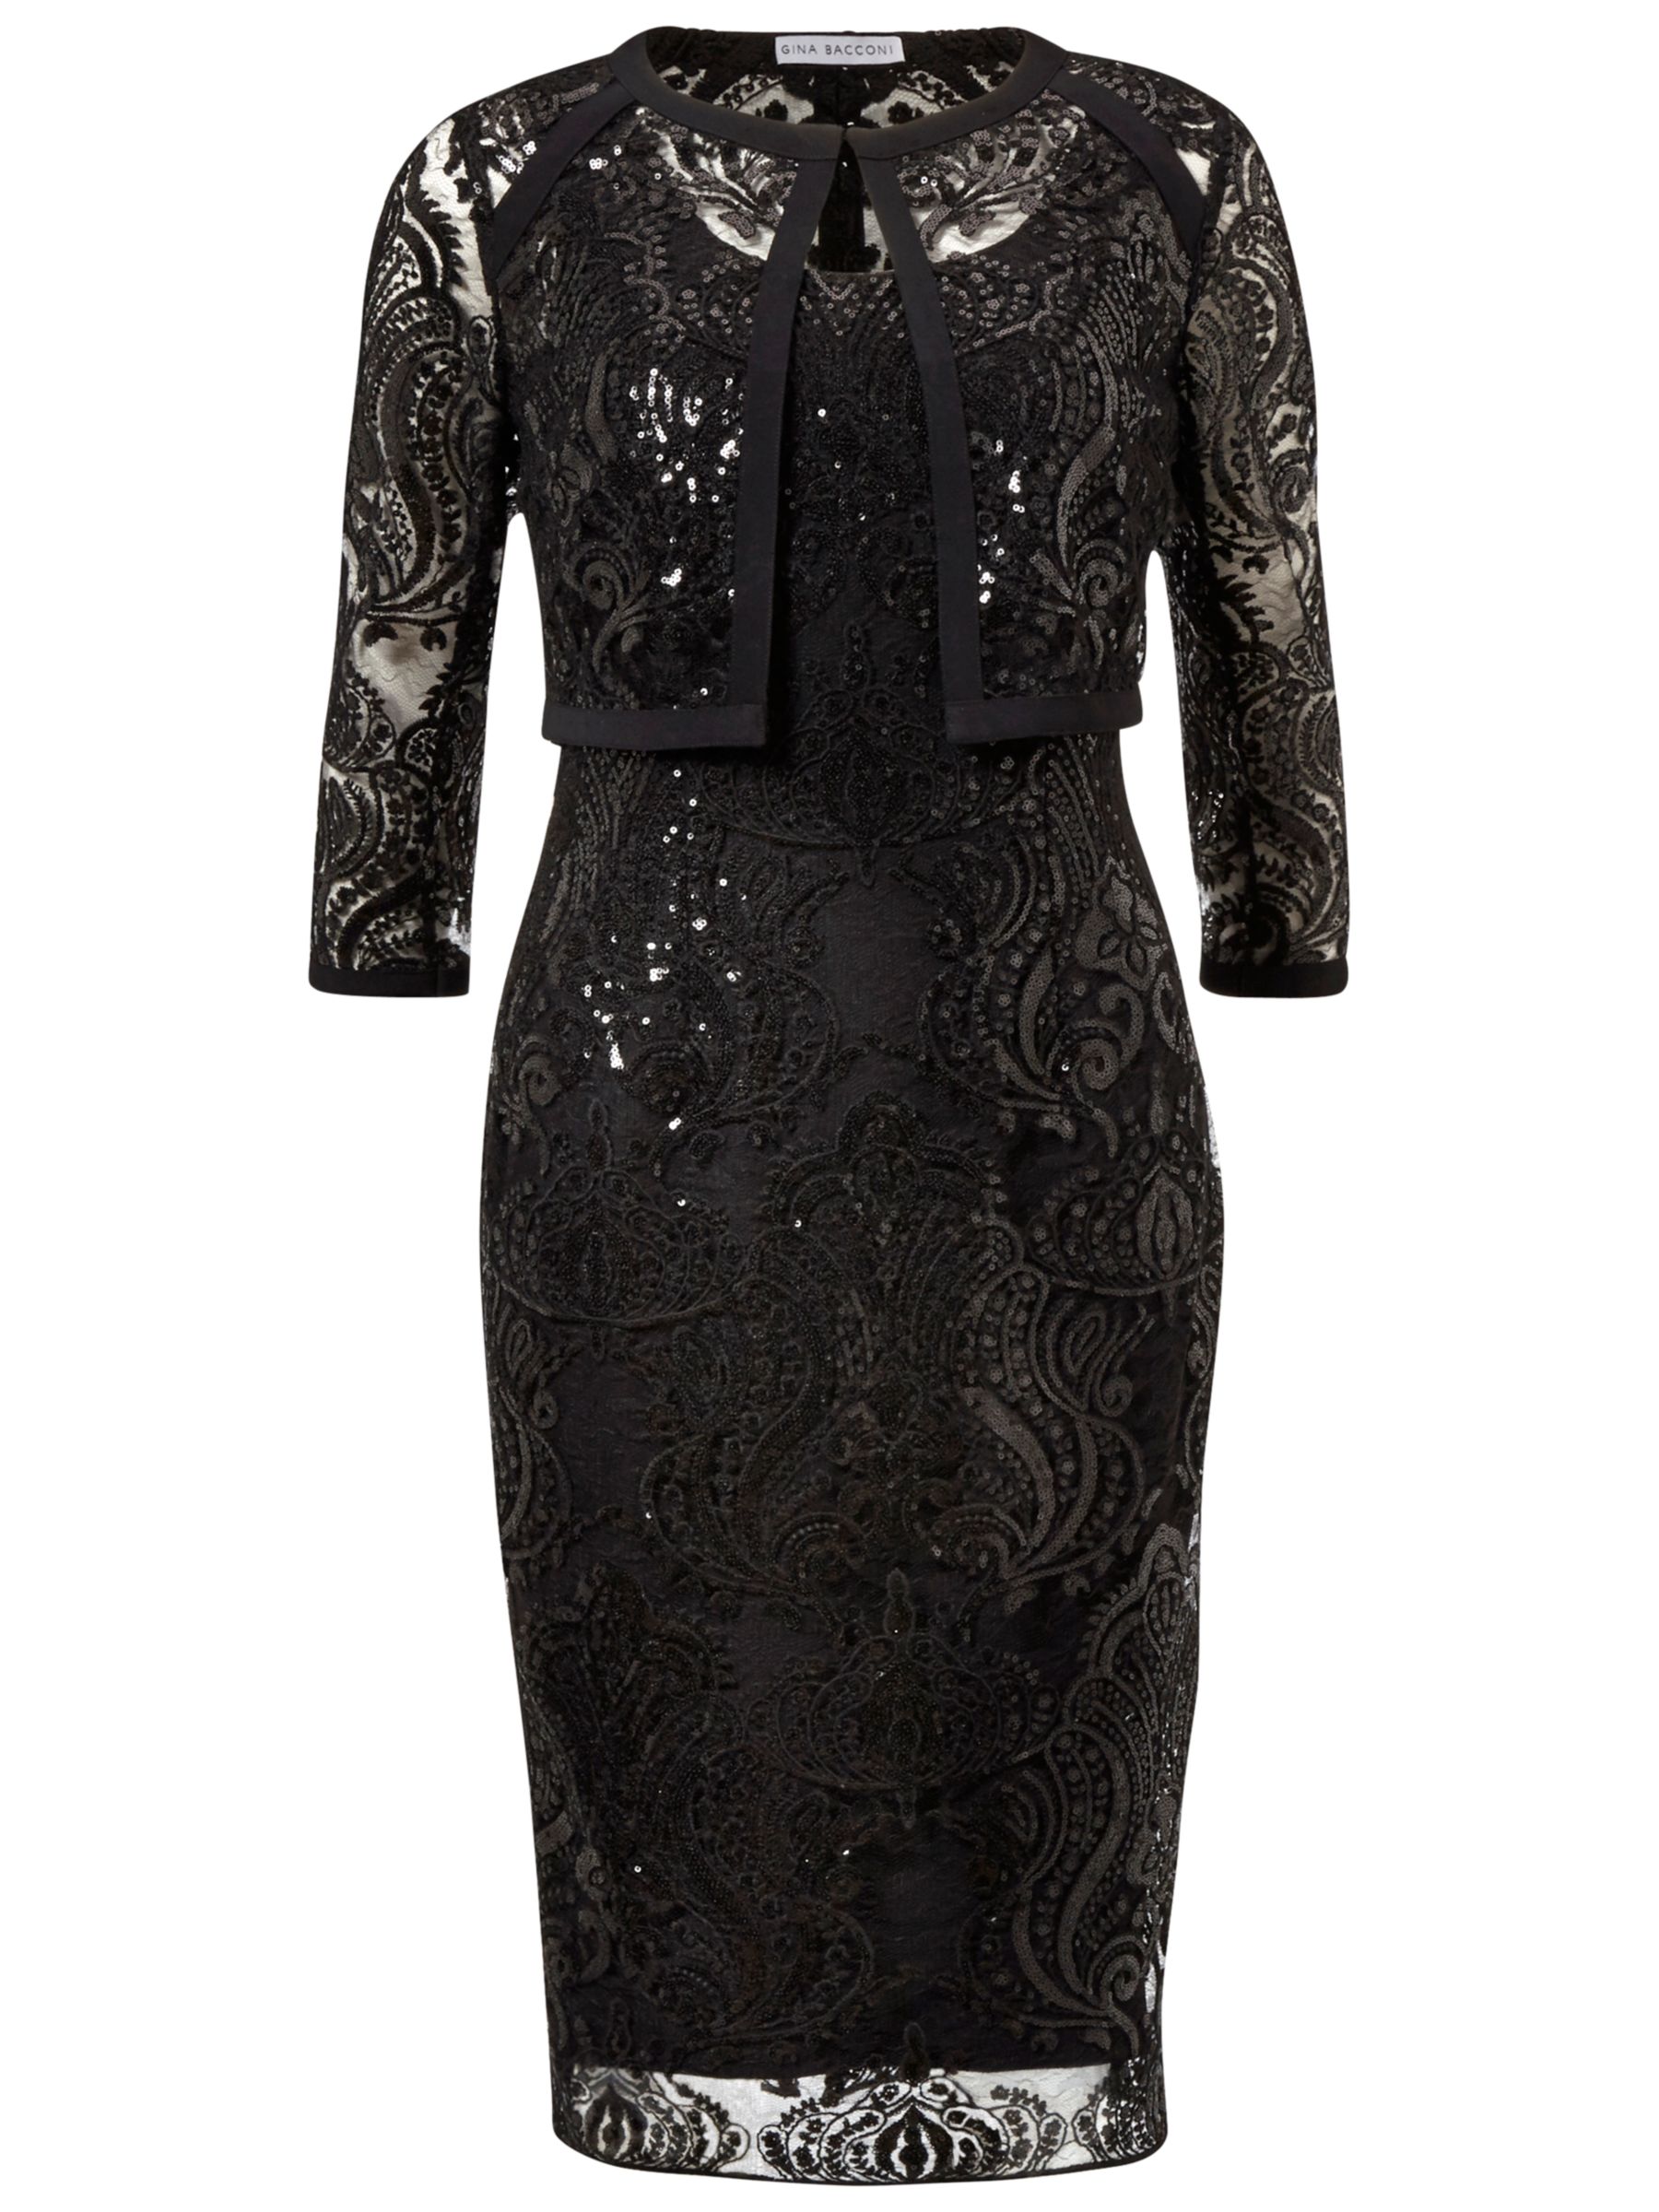 Gina Bacconi Baroque Sequin Dress And Jacket, Black